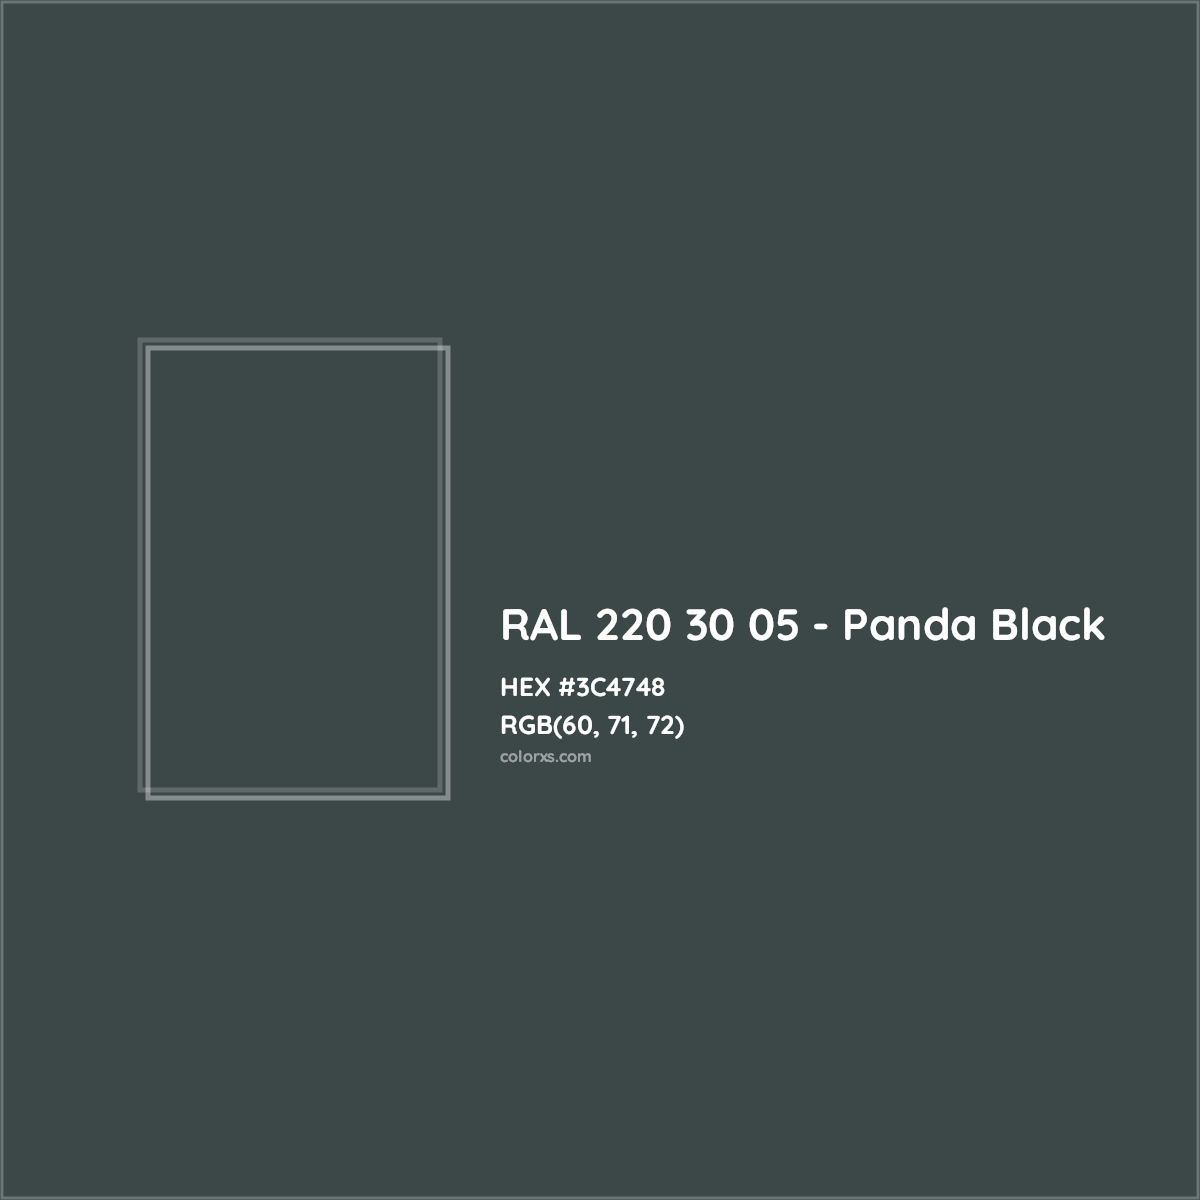 HEX #3C4748 RAL 220 30 05 - Panda Black CMS RAL Design - Color Code